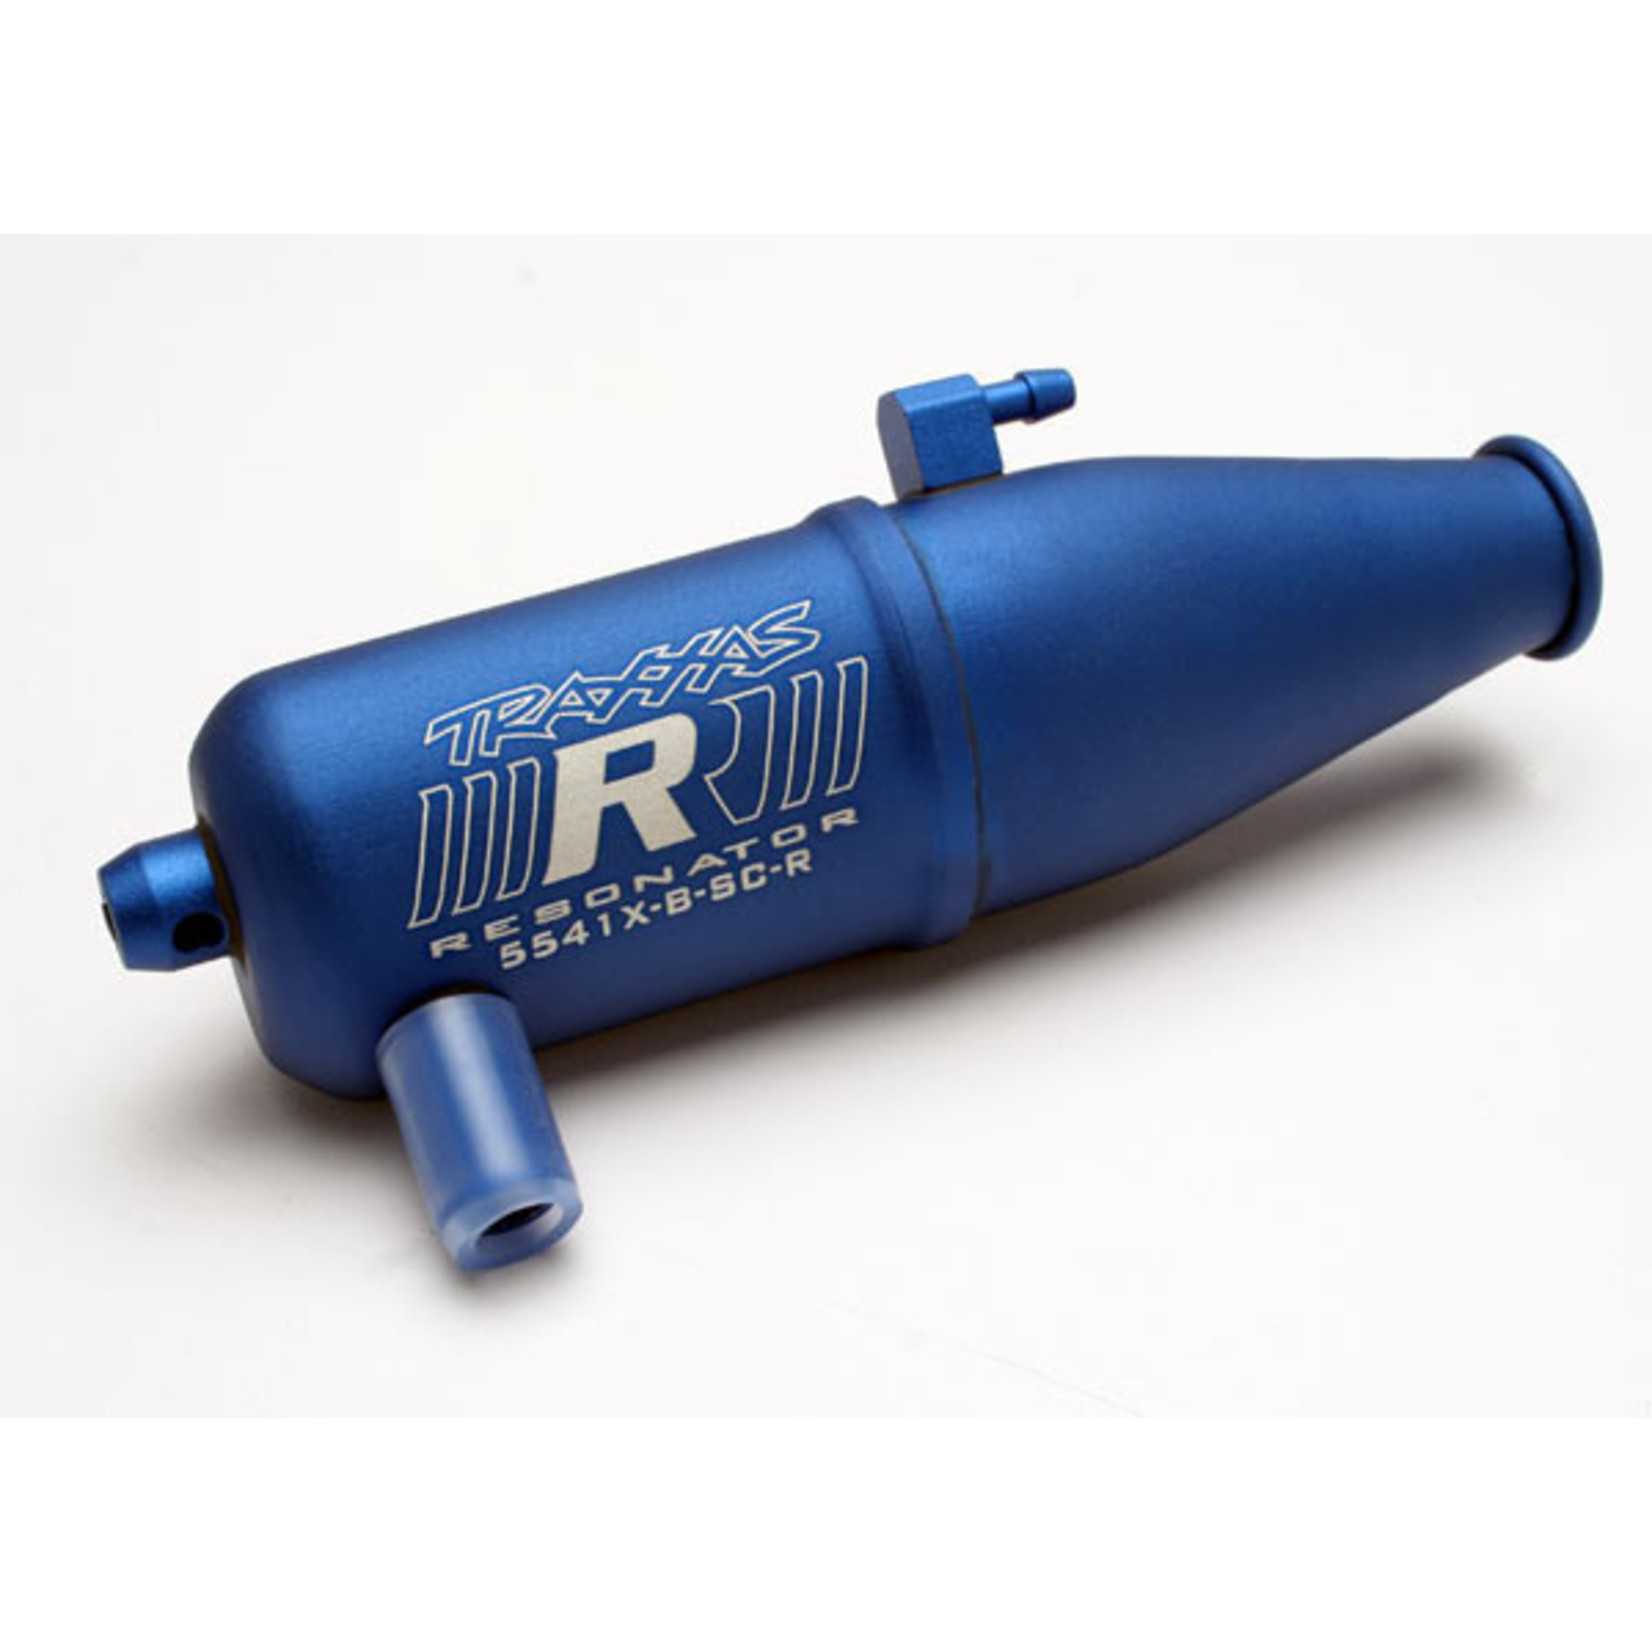 Traxxas 5541X - Tuned pipe, Resonator, R.O.A.R. legal, blu